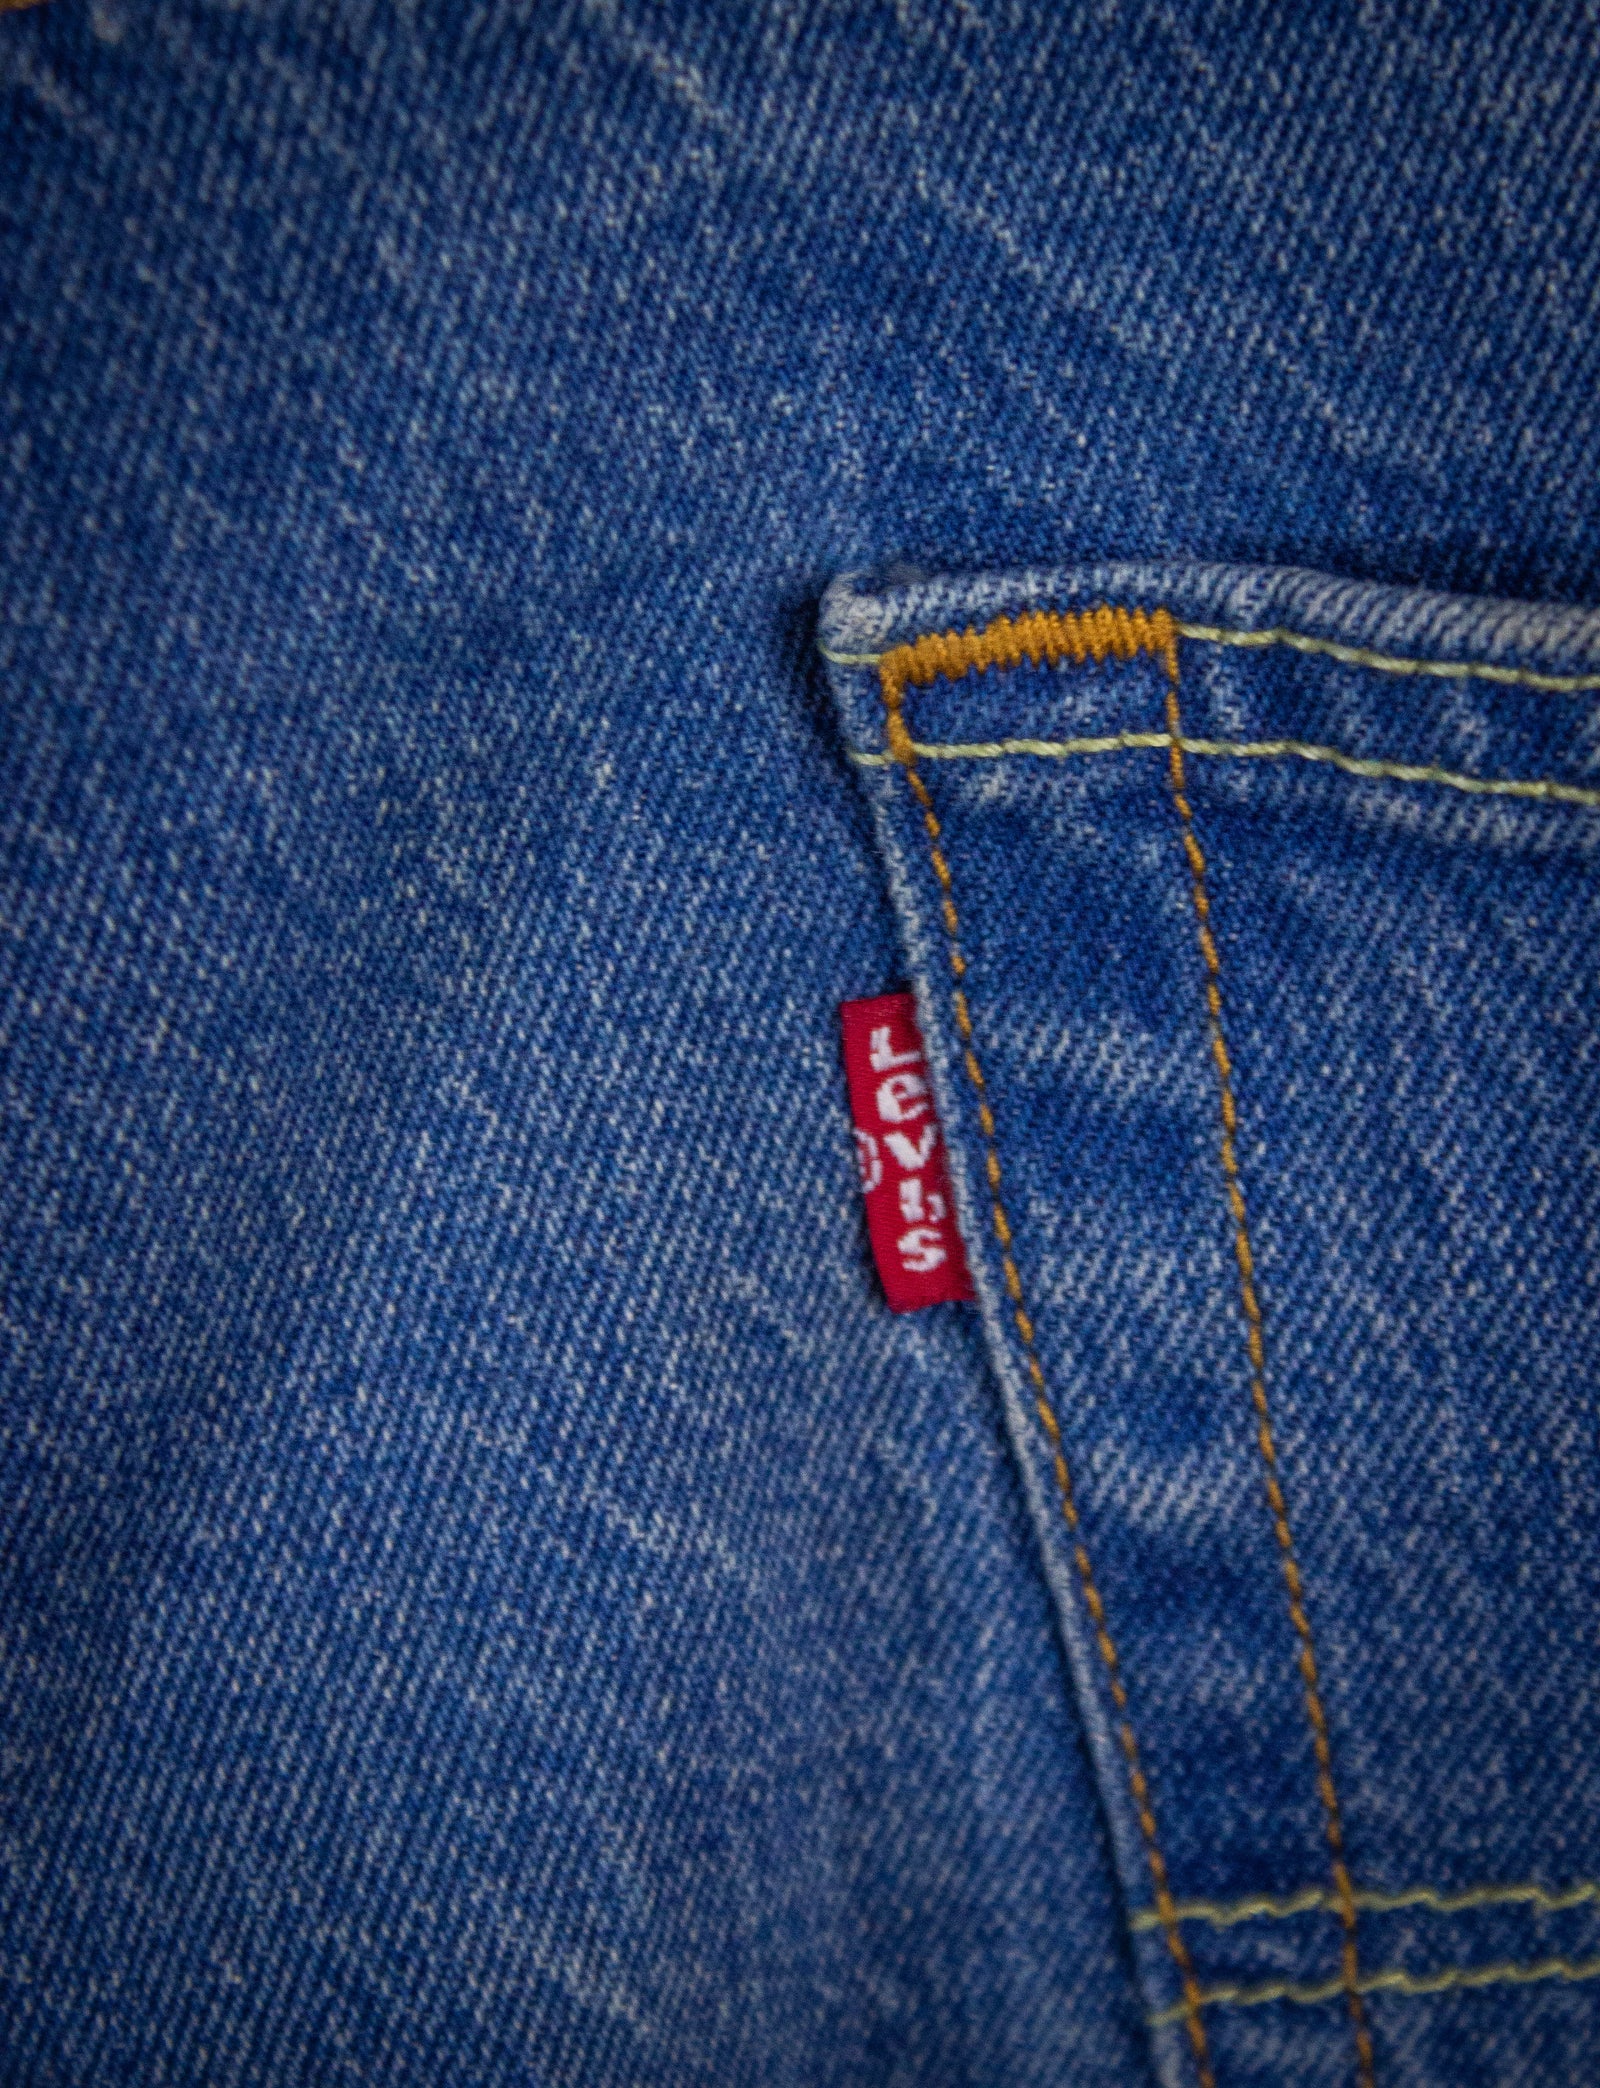 Vintage Levi's 501 Hemmed Denim Shorts Medium Wash 36w